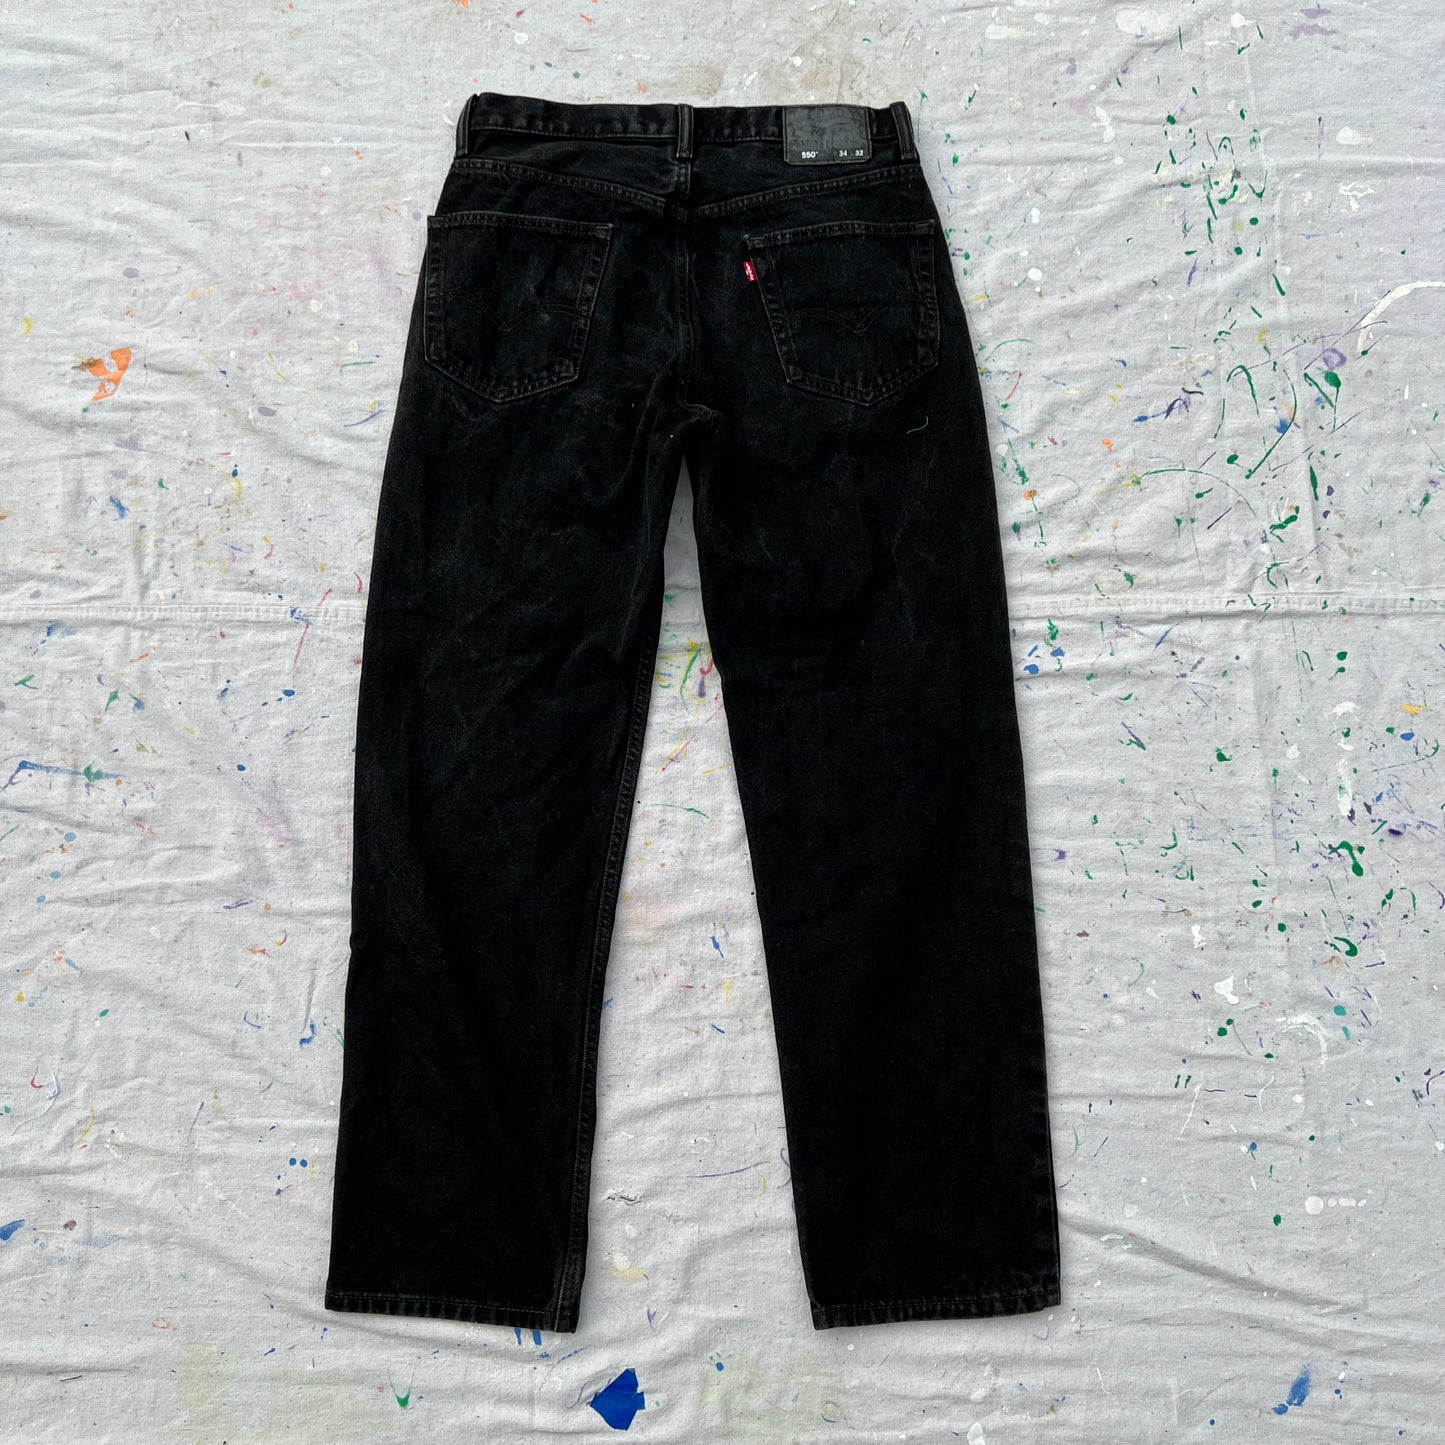 Wäne Wear Jeans (Multicolor/Black)- 34/32